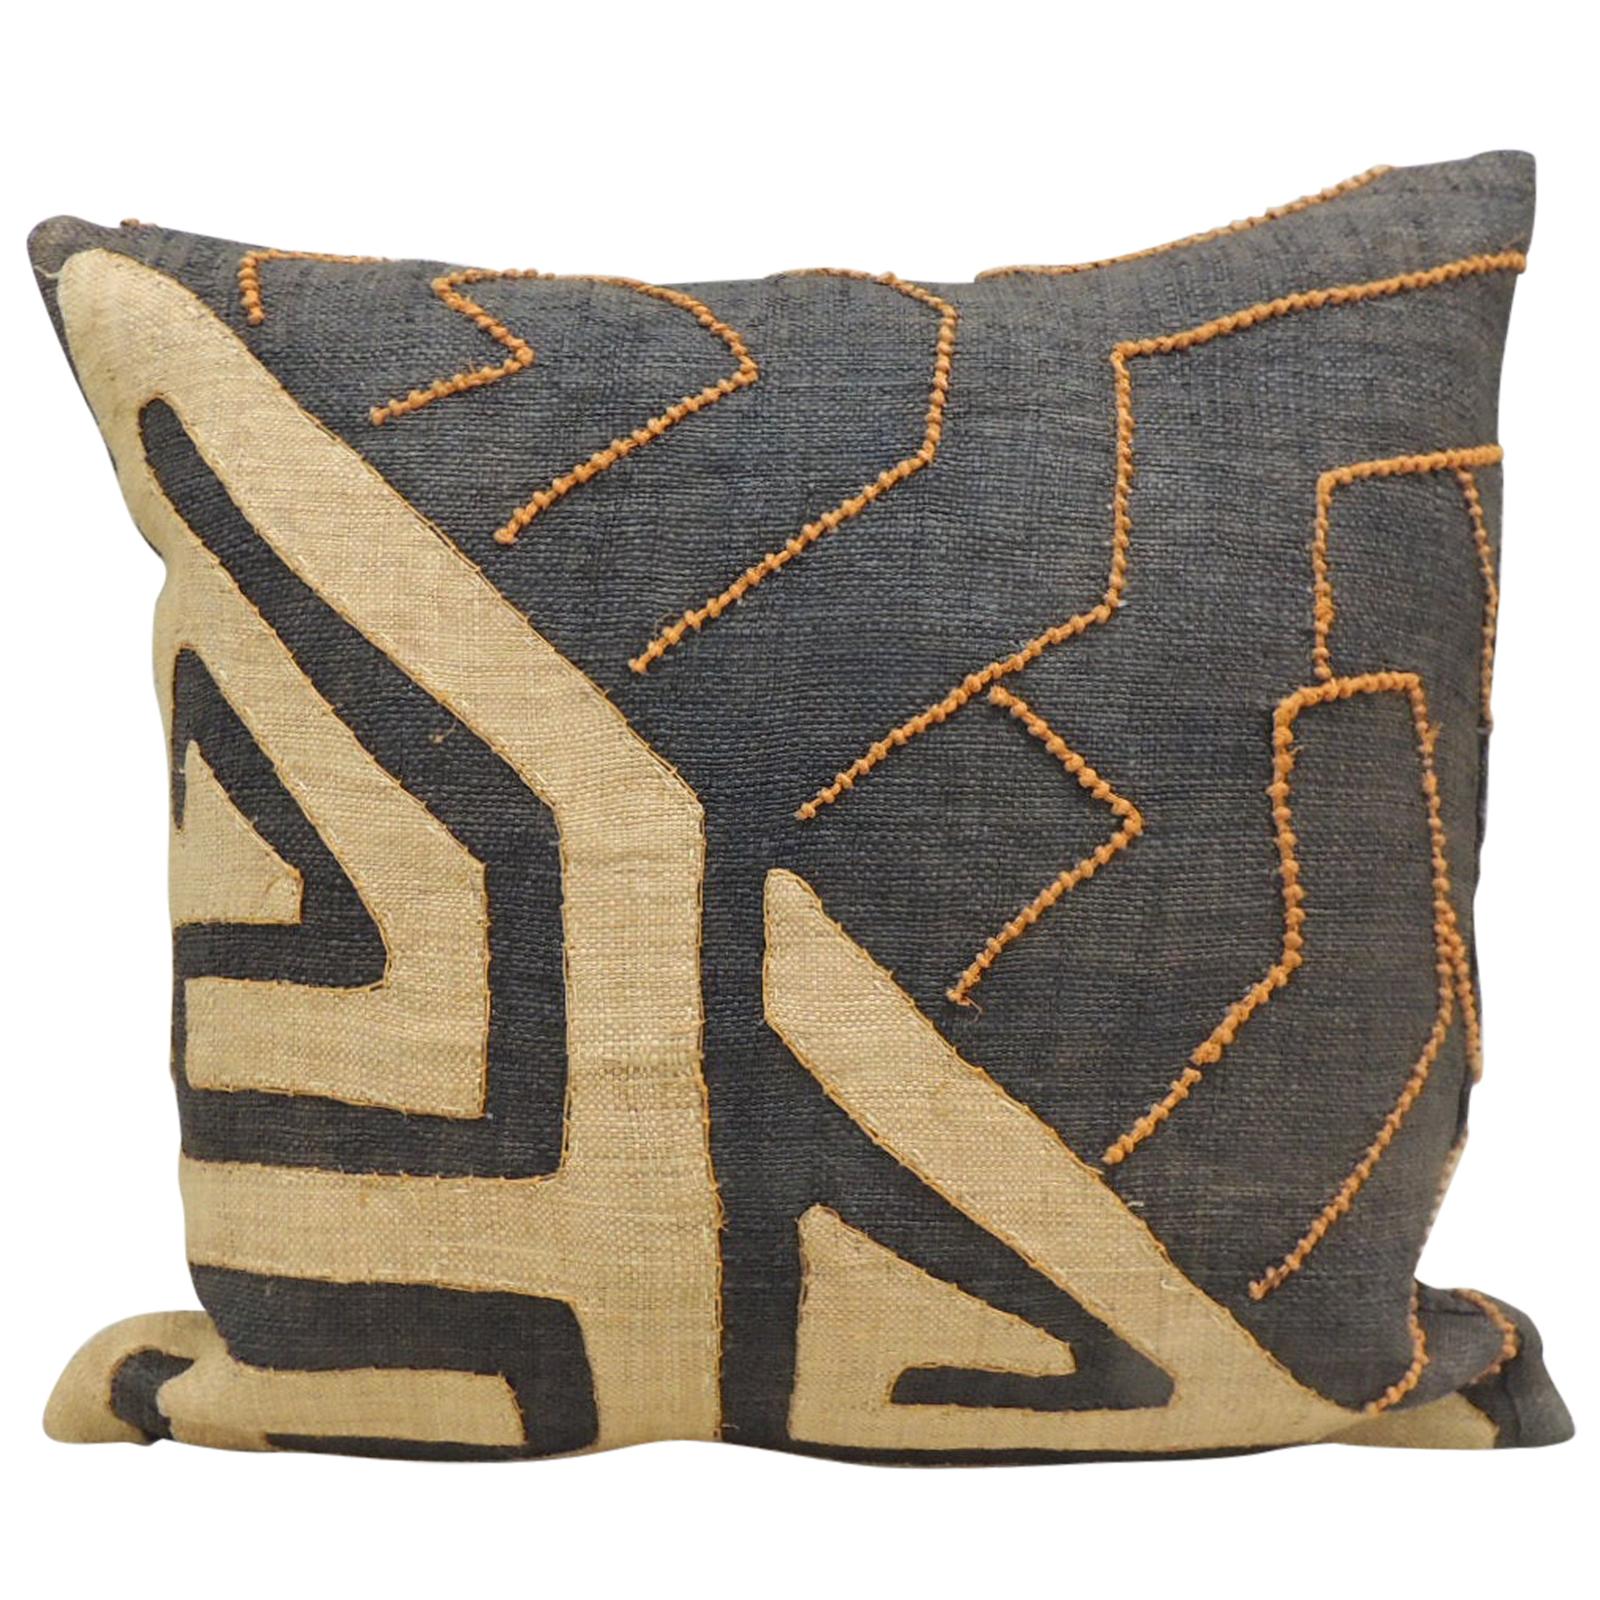 Vintage Kuba Orange and Black Handwoven Patchwork African Decorative Pillow